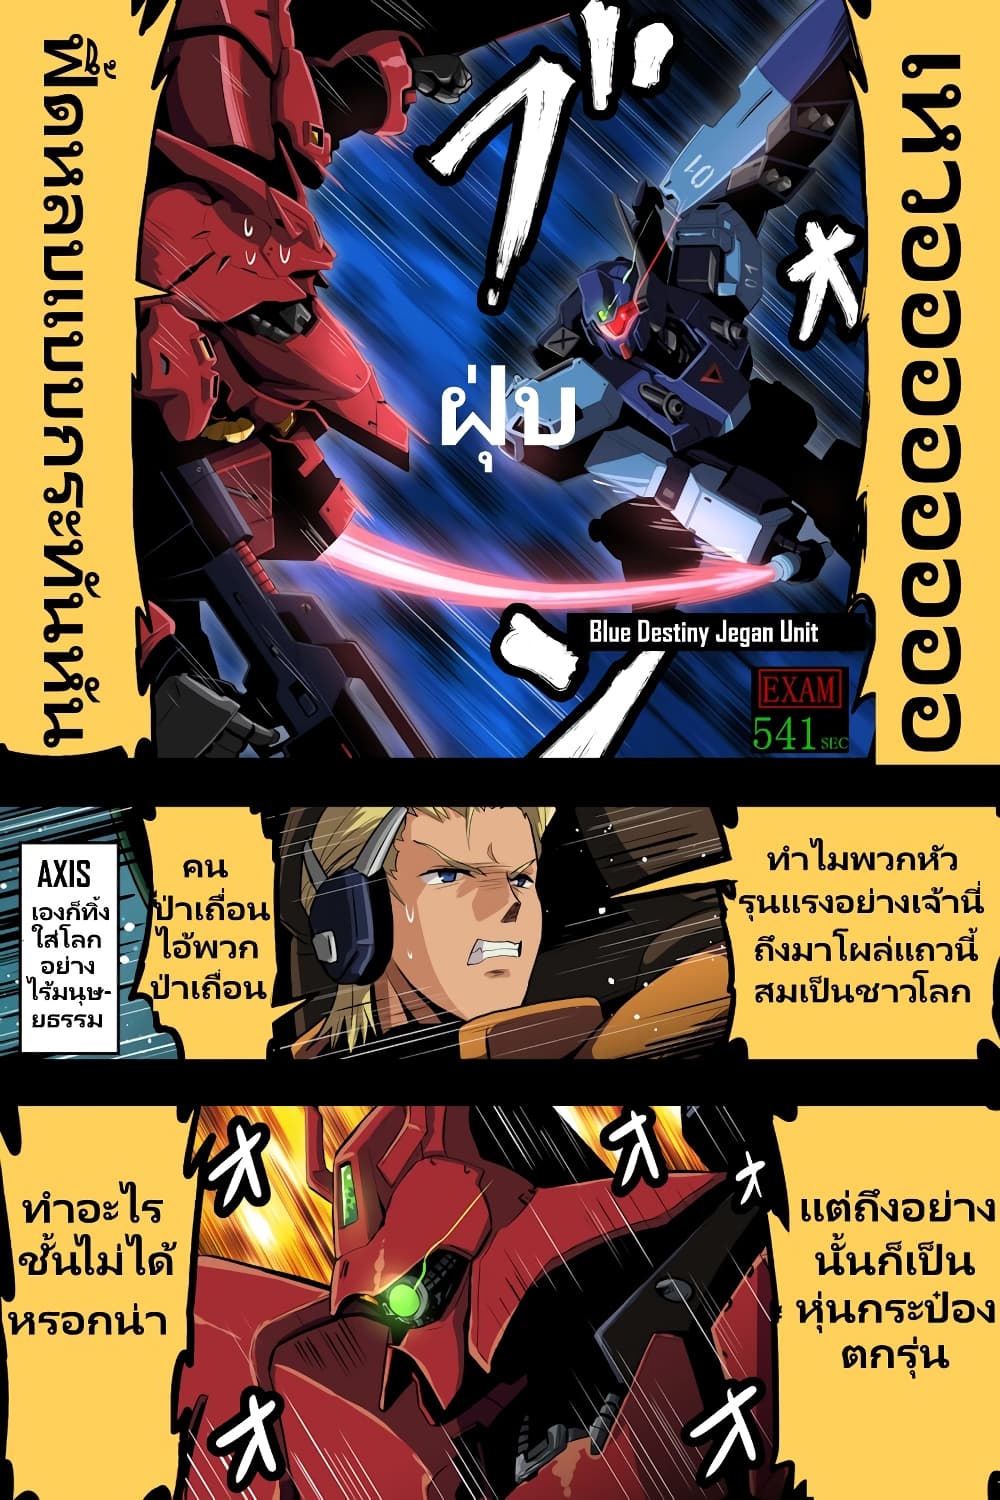 Fuji Takanasu’s Gundam Book ตอนที่ 13 (3)